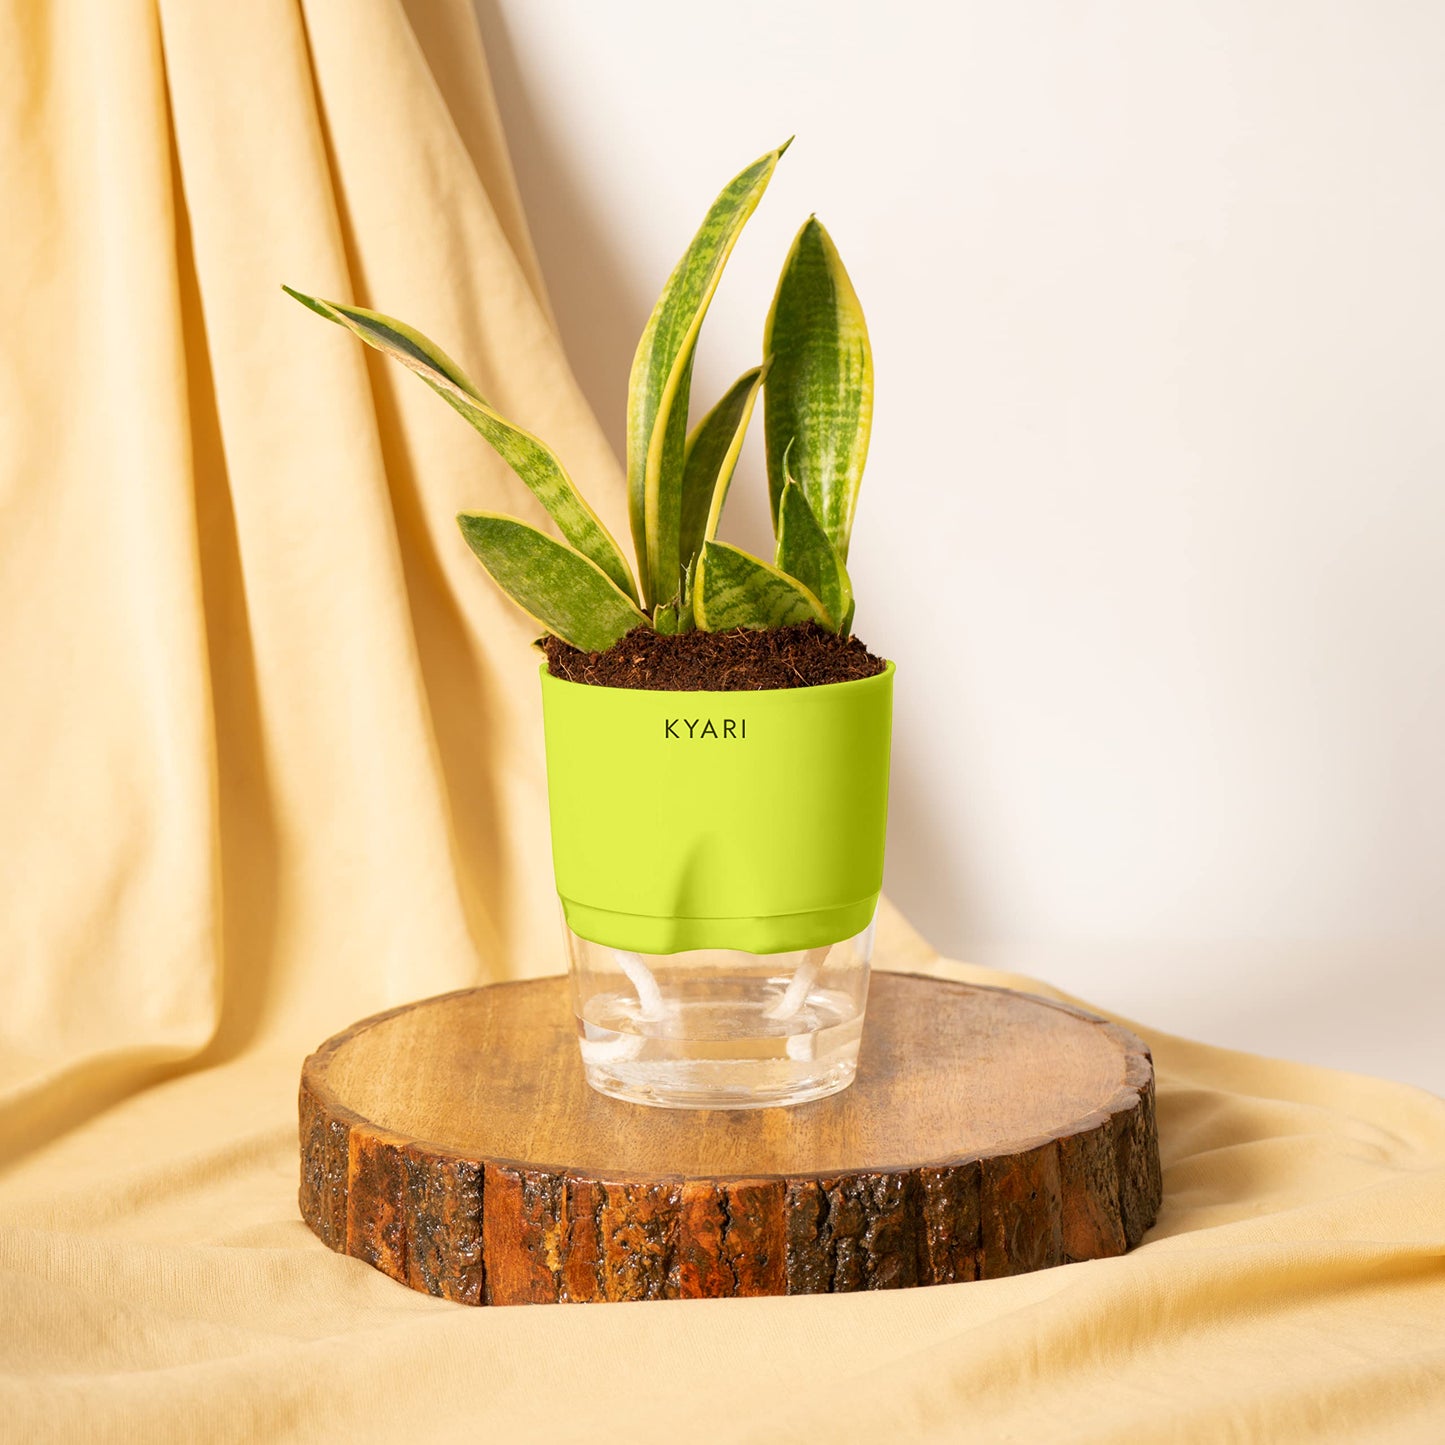 Kyari.Co Kyari Sansevieria Futura Superba Snake Plant With Self Watering Pot For Home & Office Decor